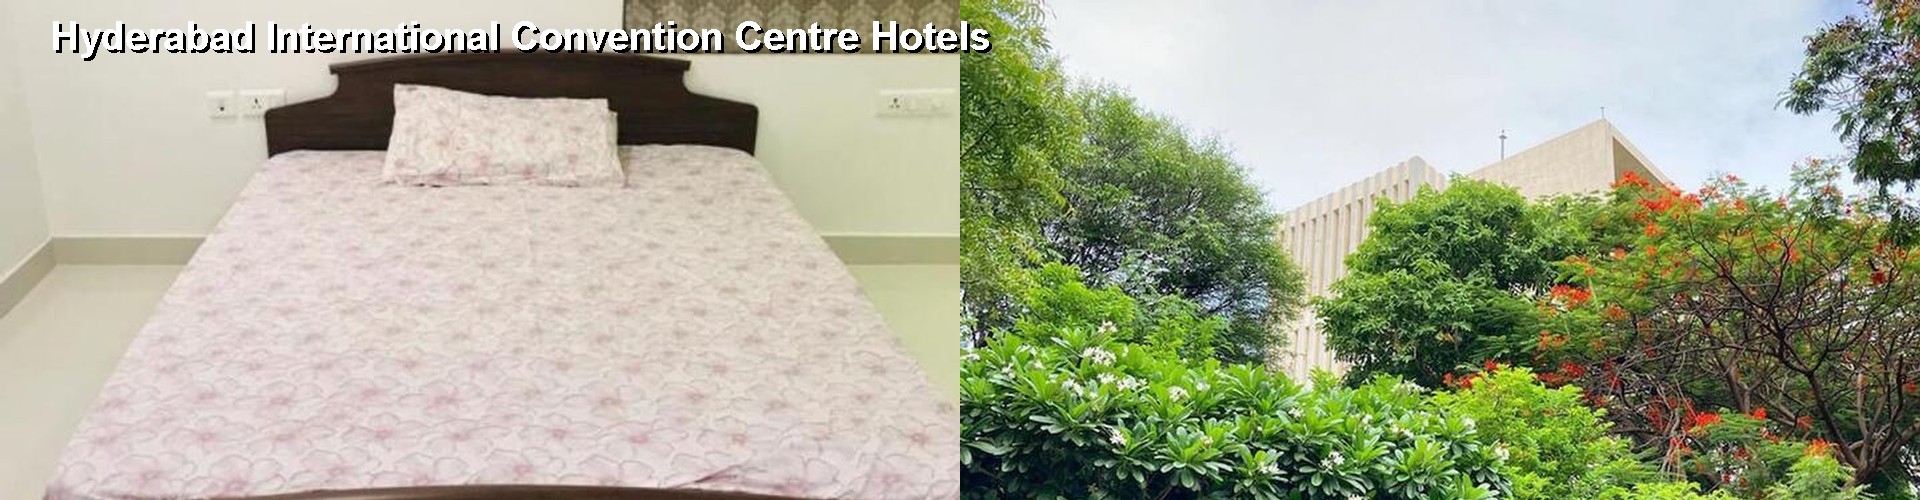 5 Best Hotels near Hyderabad International Convention Centre